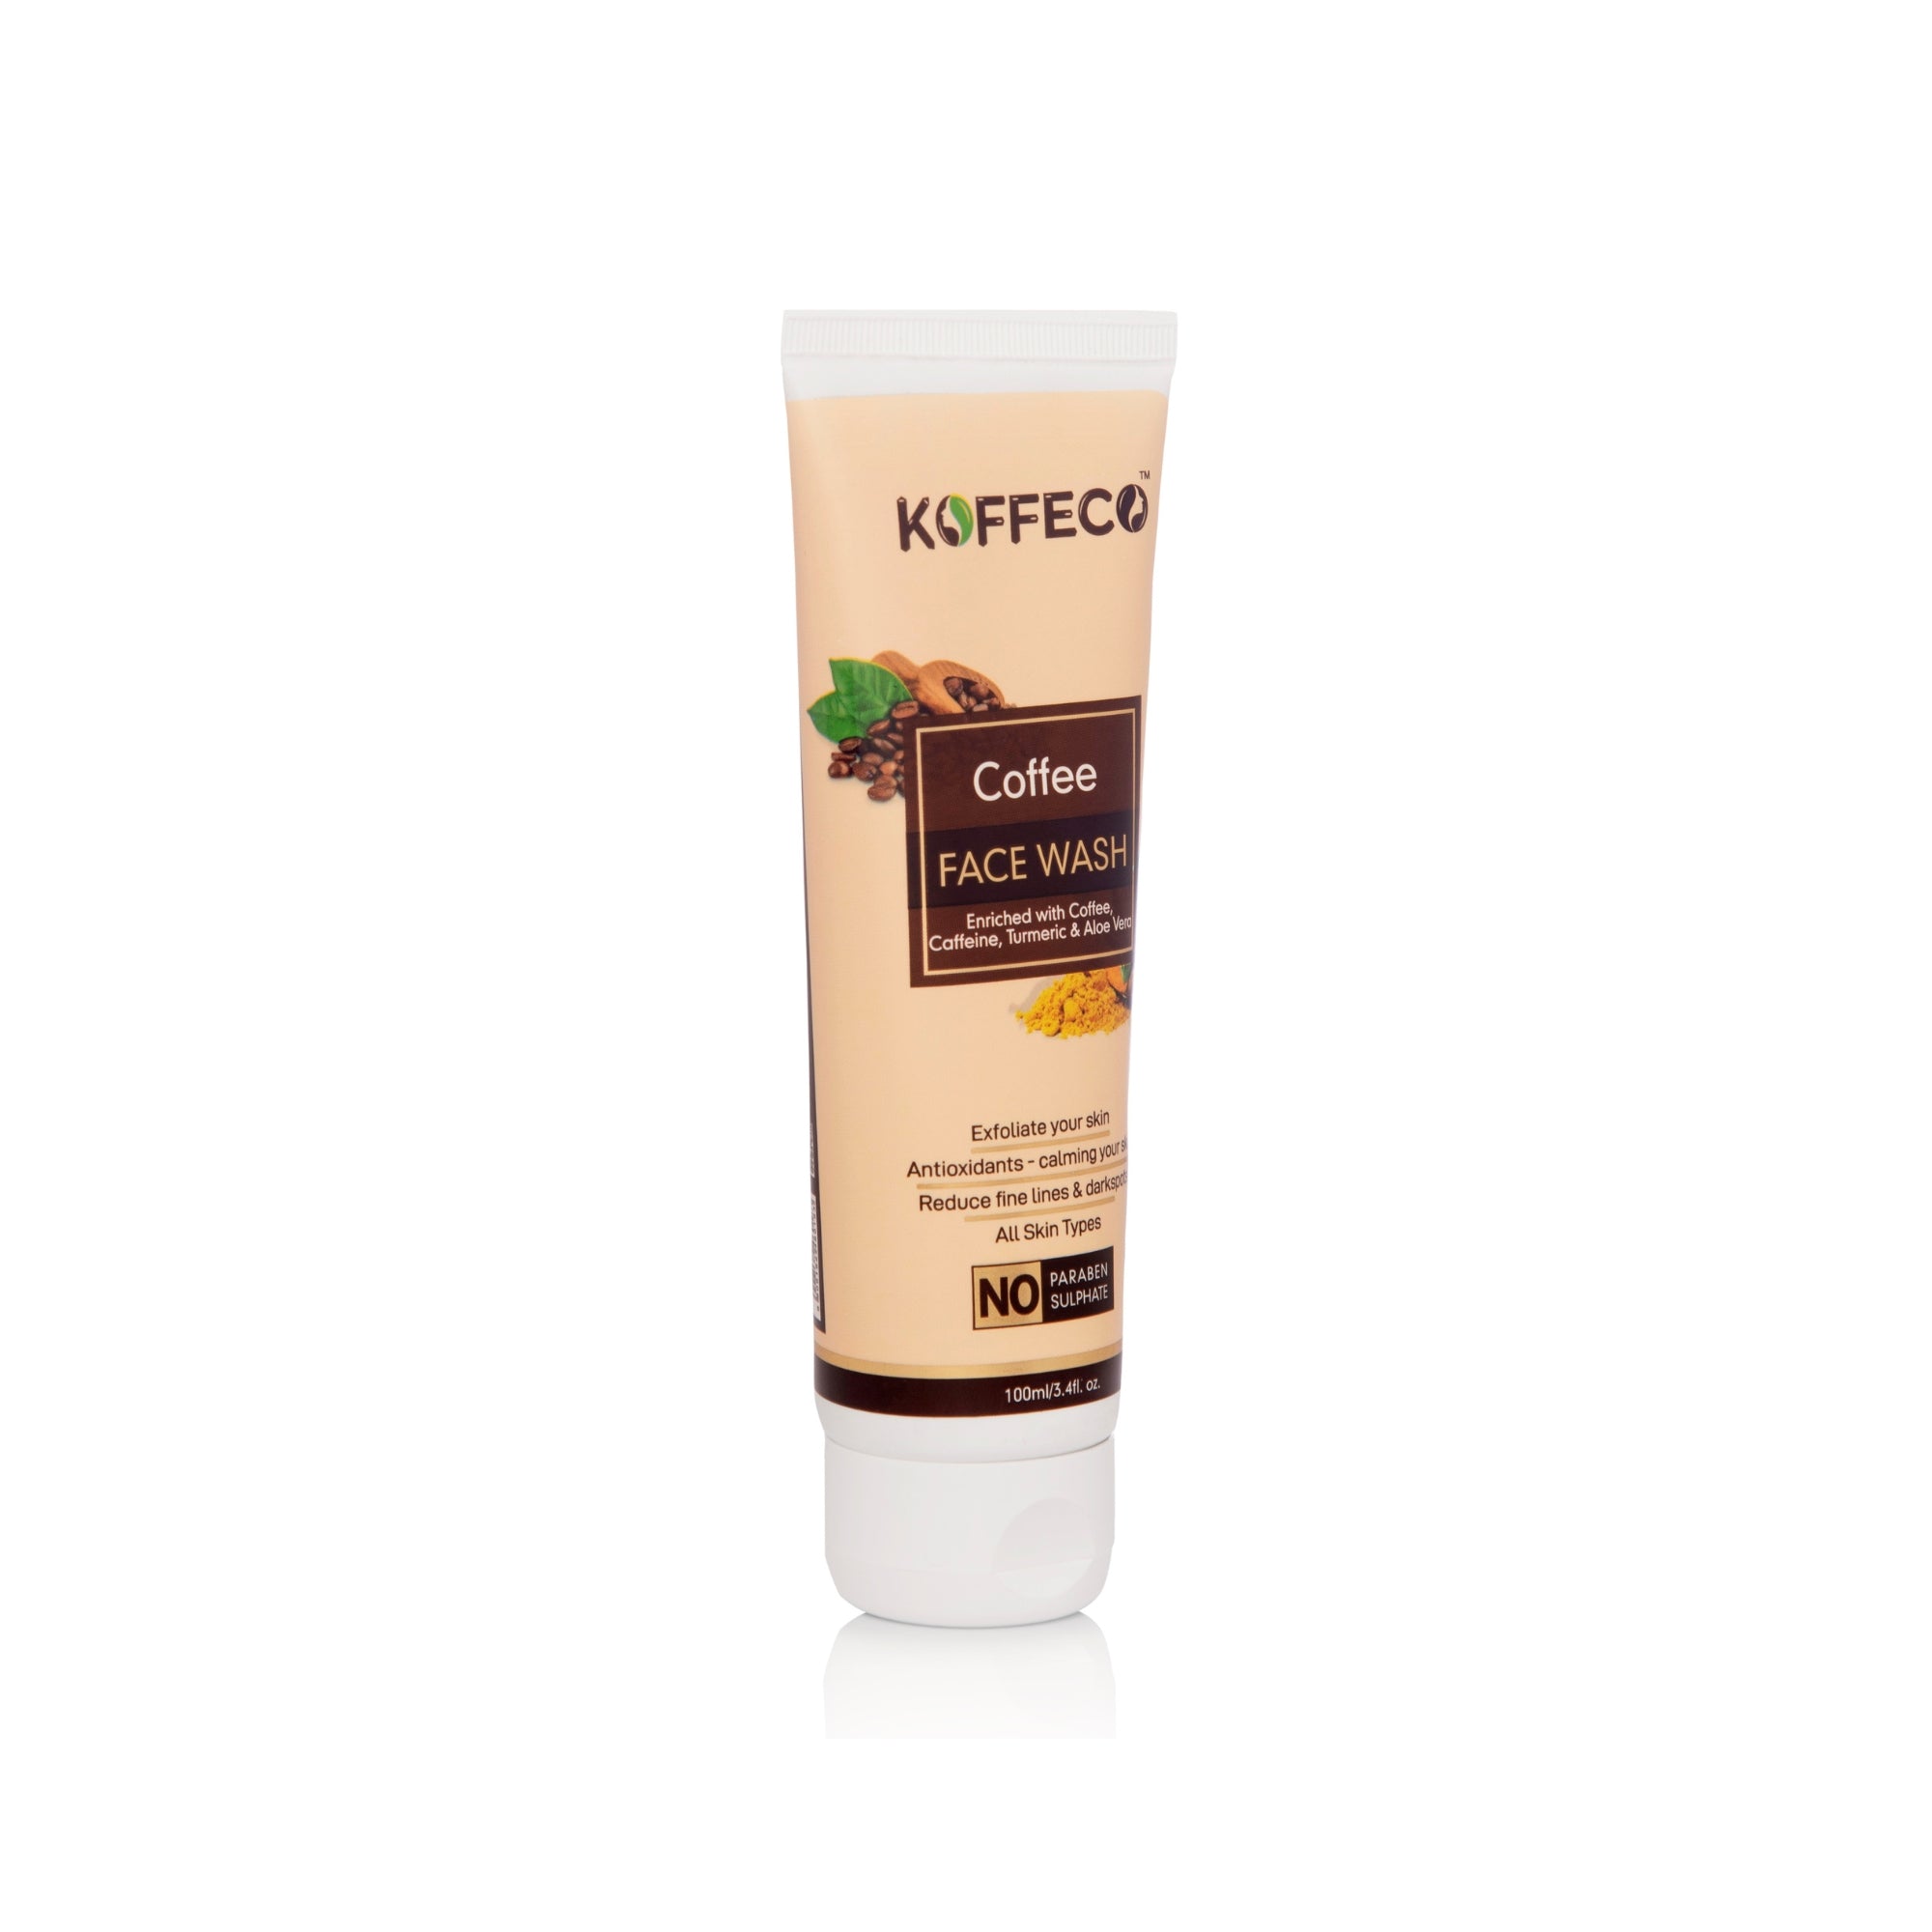 Koffeco Coffee Face Wash (100ml)